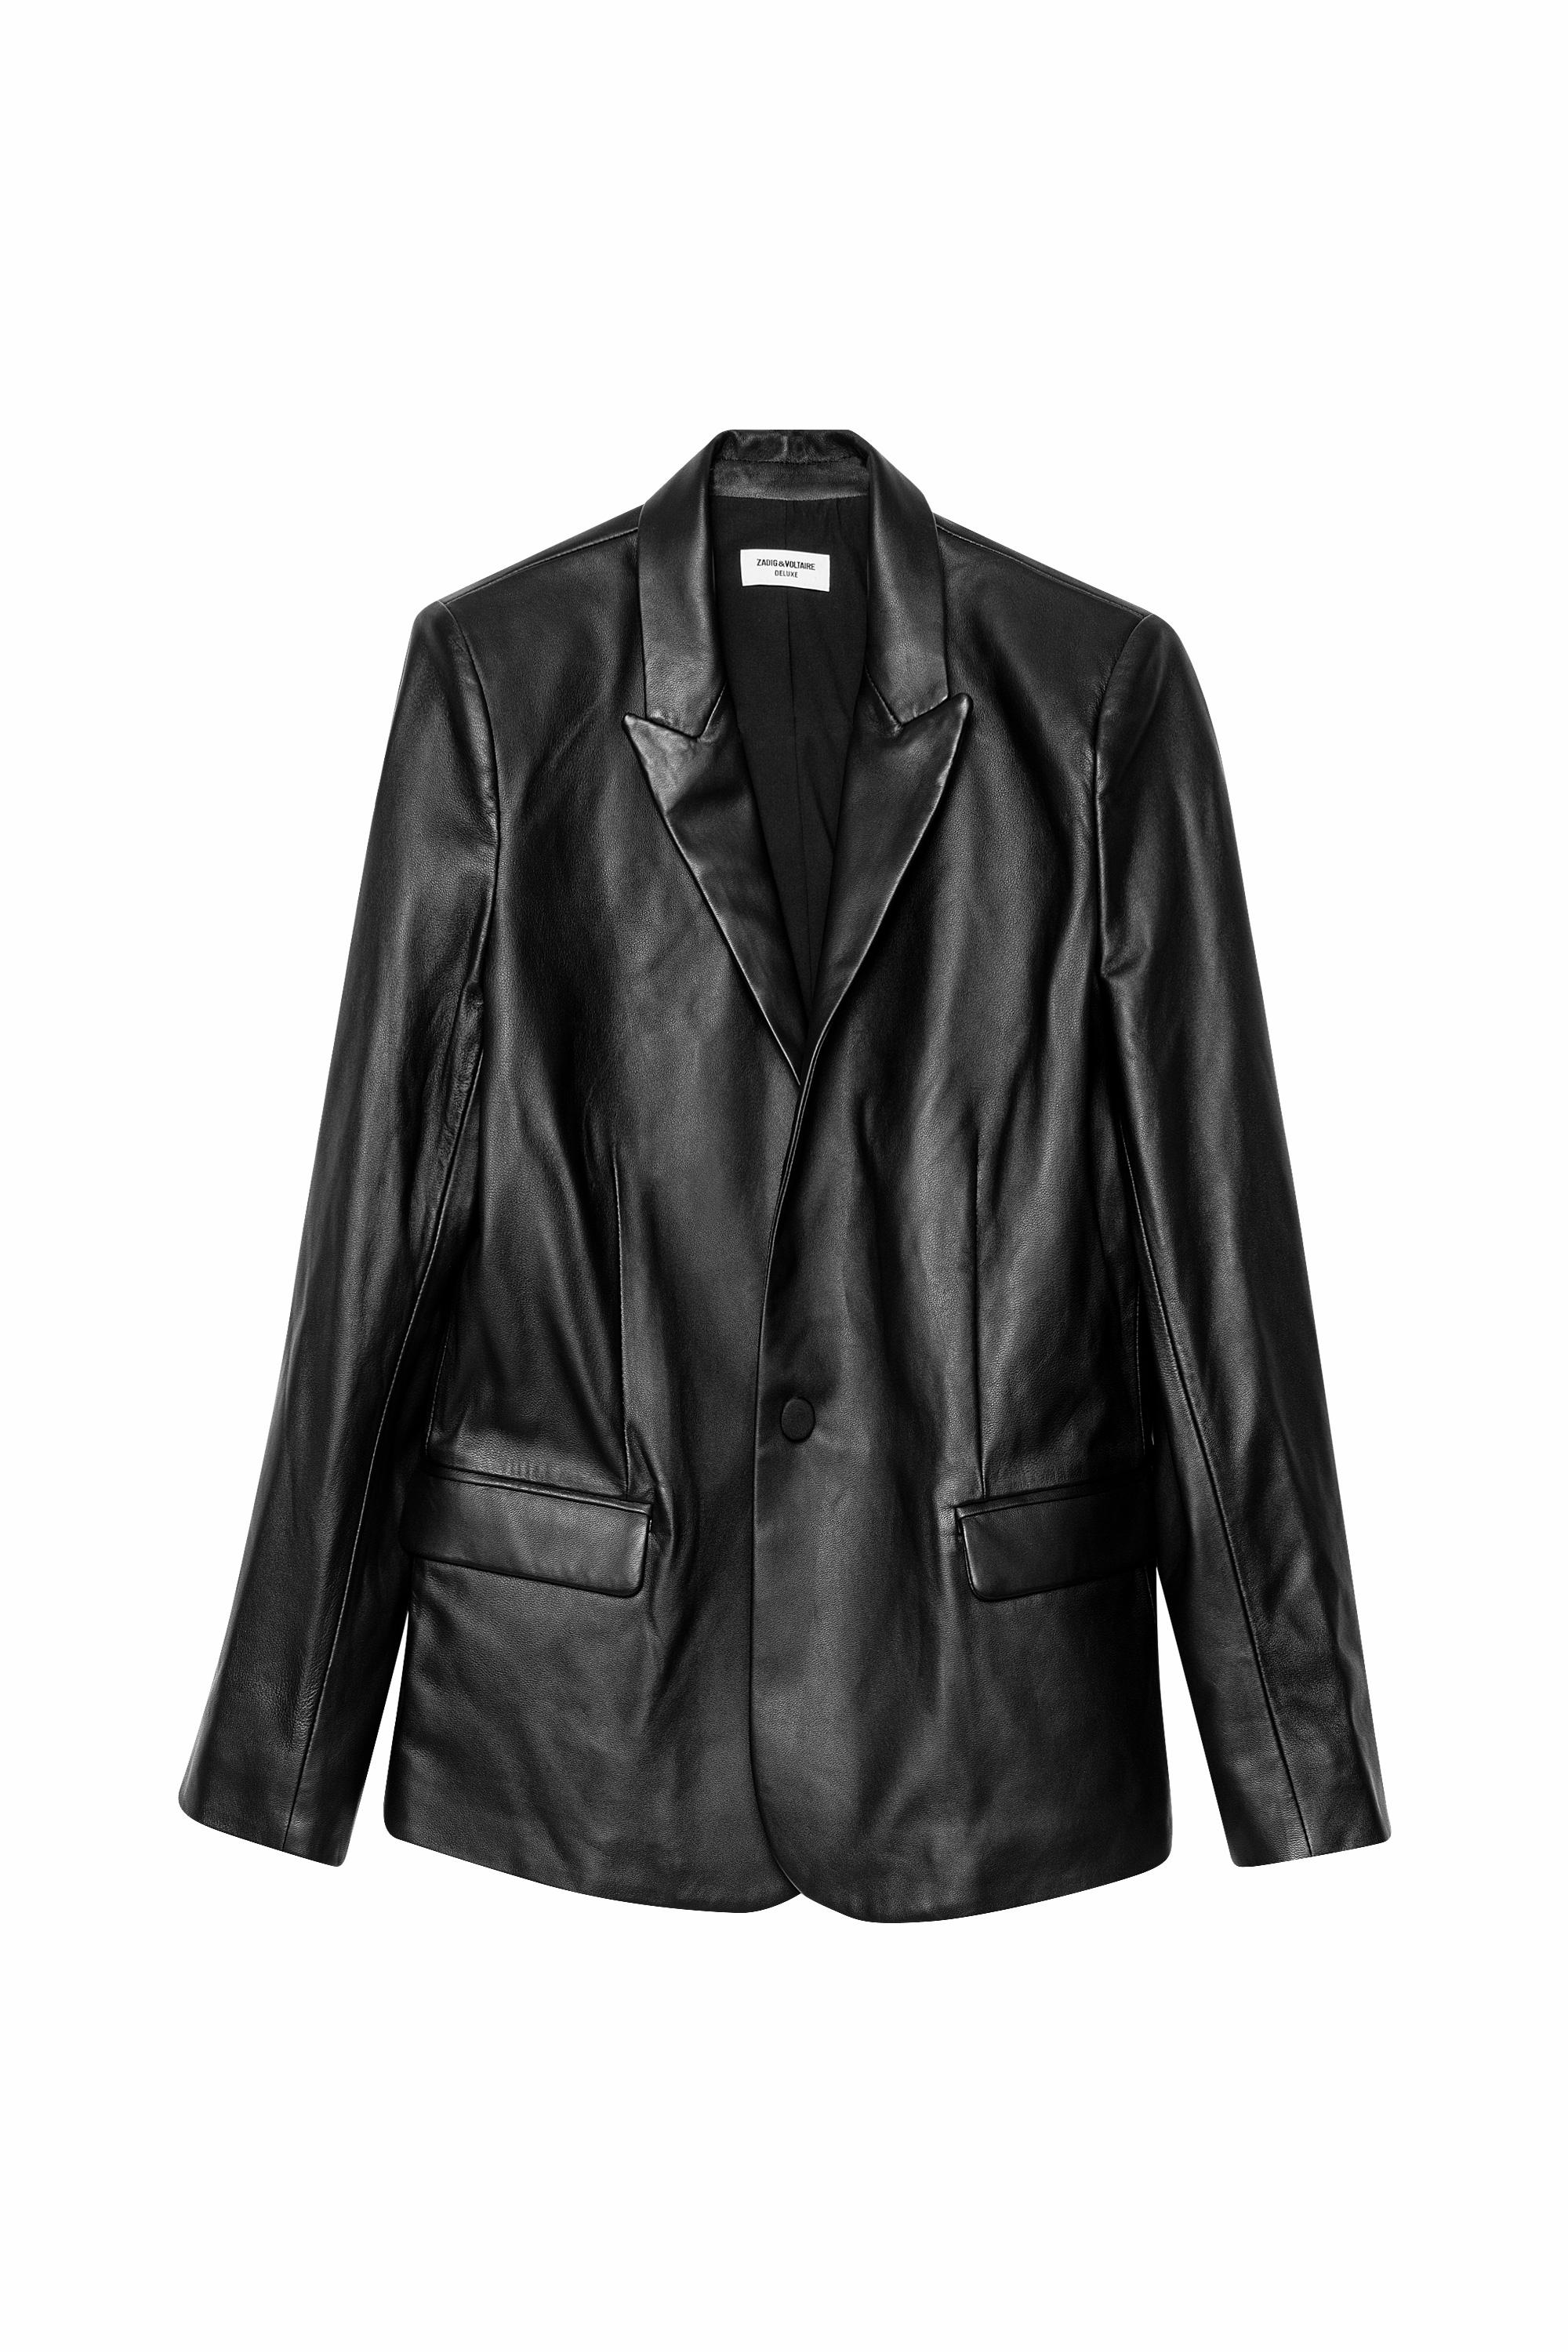 Zadig & Voltaire Leather Victor Deluxe Jacket in Black for Men - Lyst